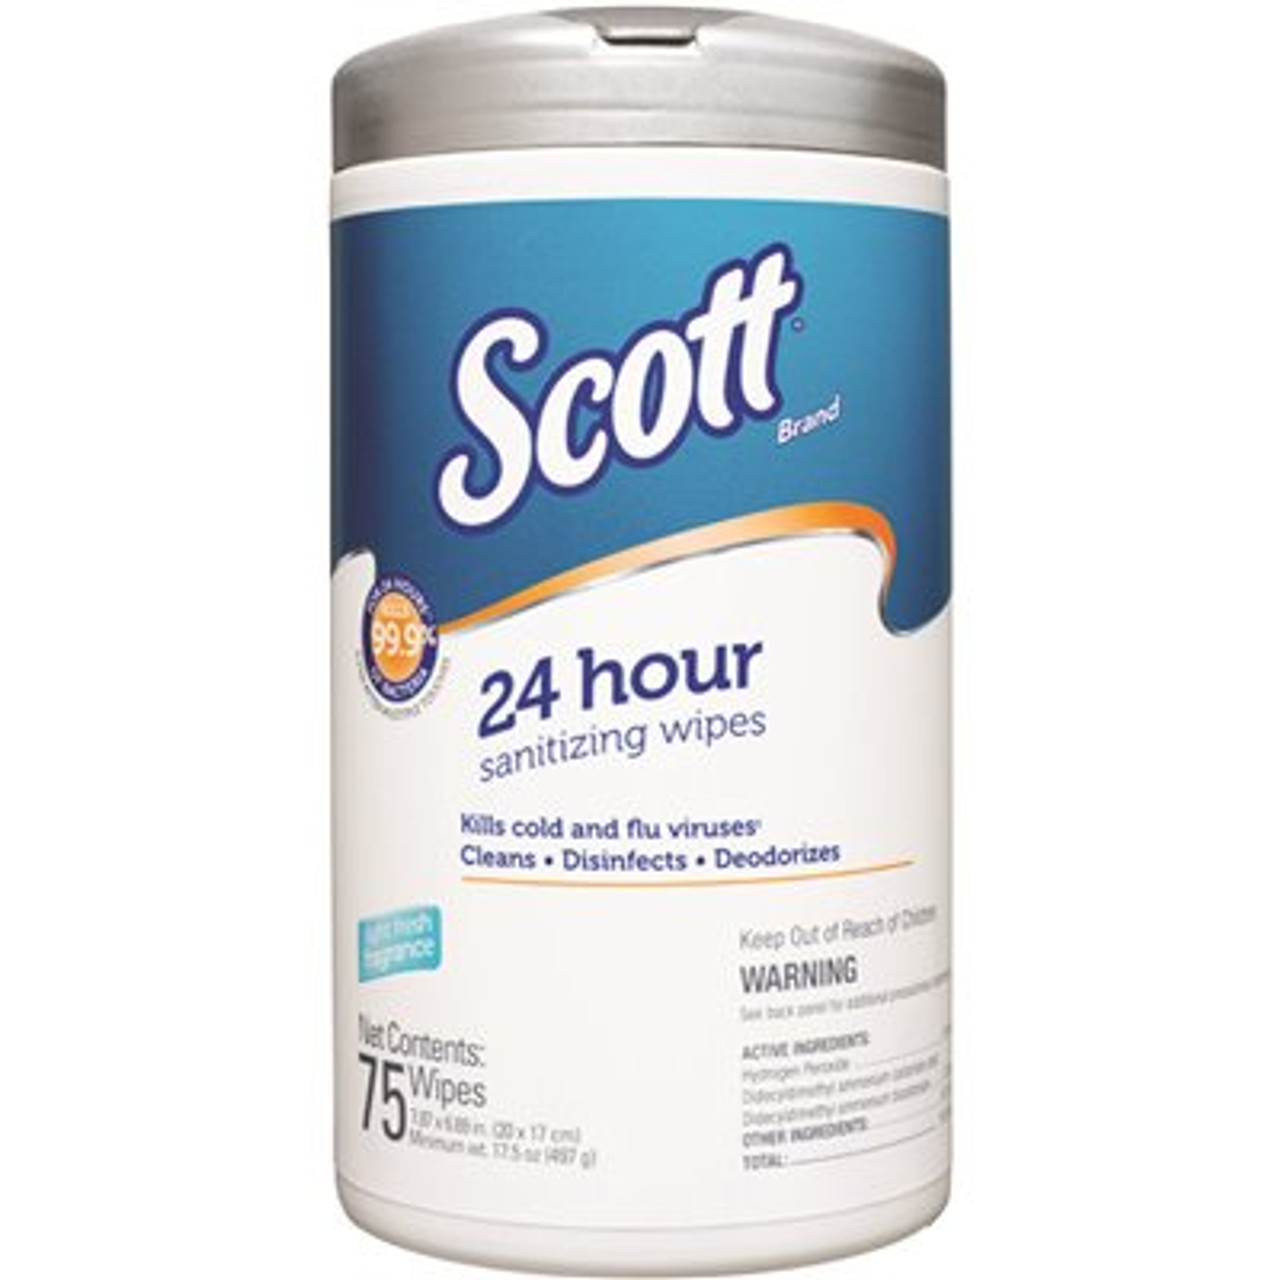 Scott 24-Hour Sanitizing Wipes (41526), Canister, White, 75 Wipes/Canister, 6 Canisters/Case, 450 Wipes/Case